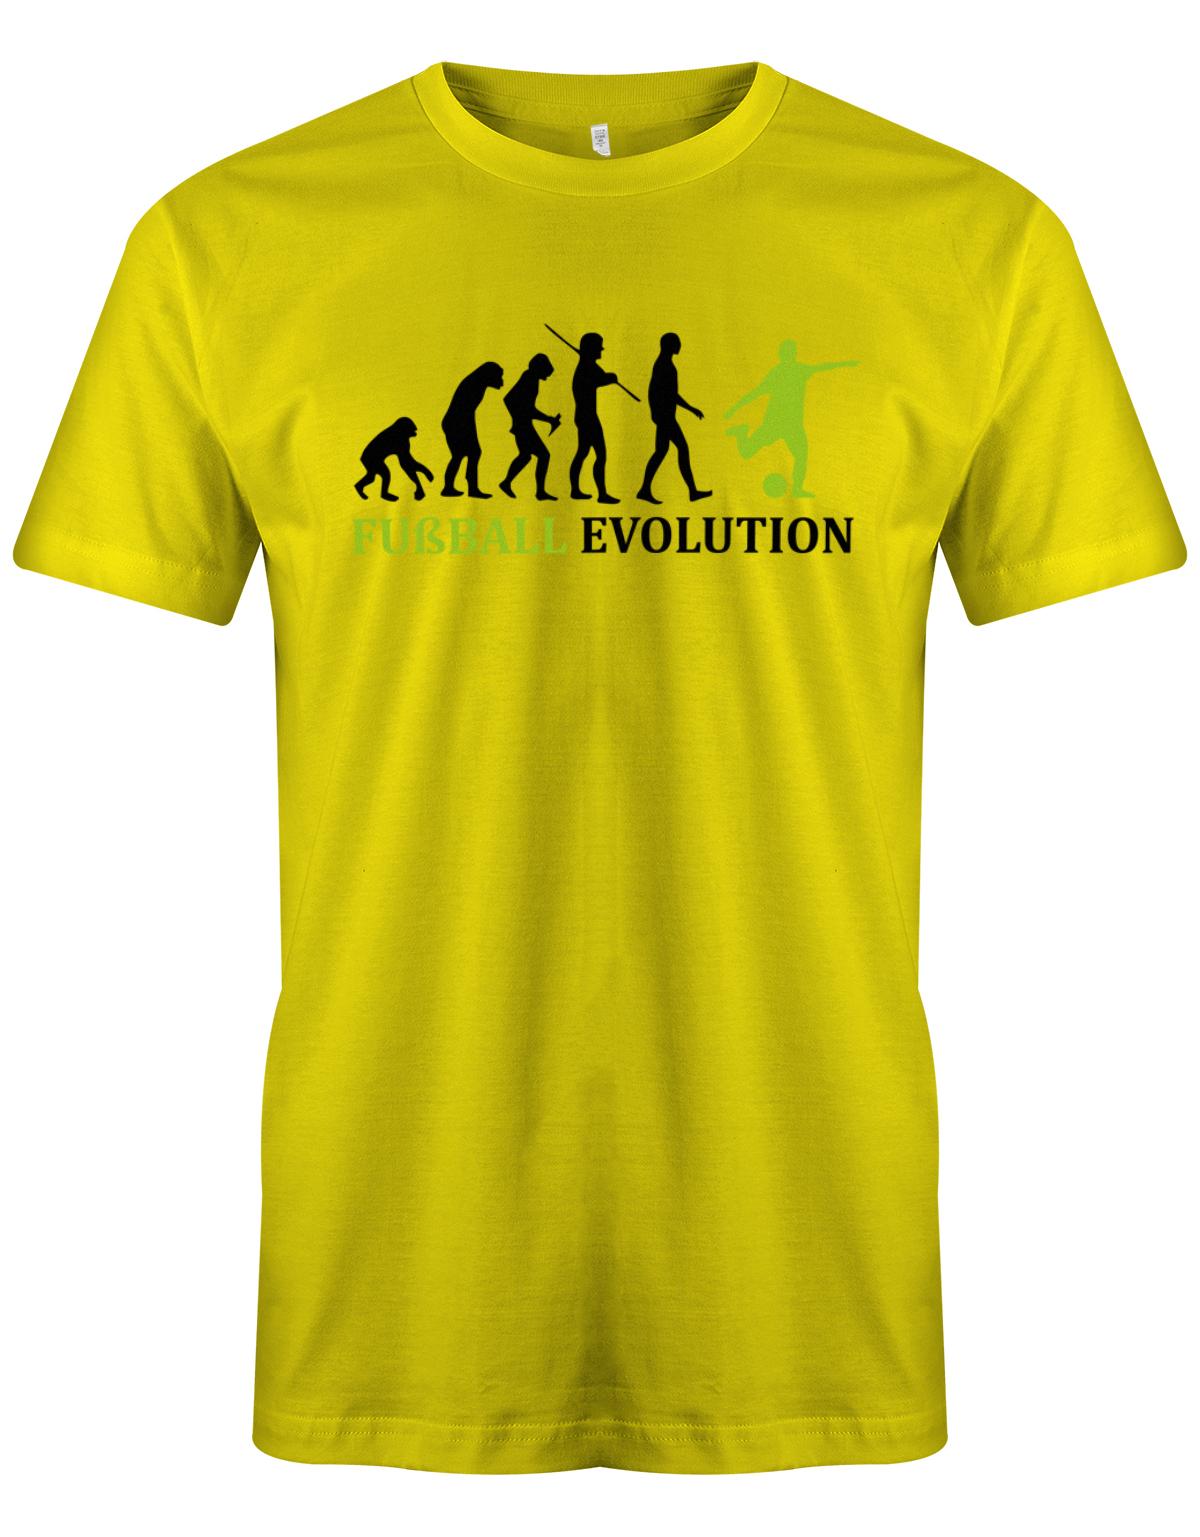 Fussball-Evolution-Herren-Shirt-Gelb-Gr-n